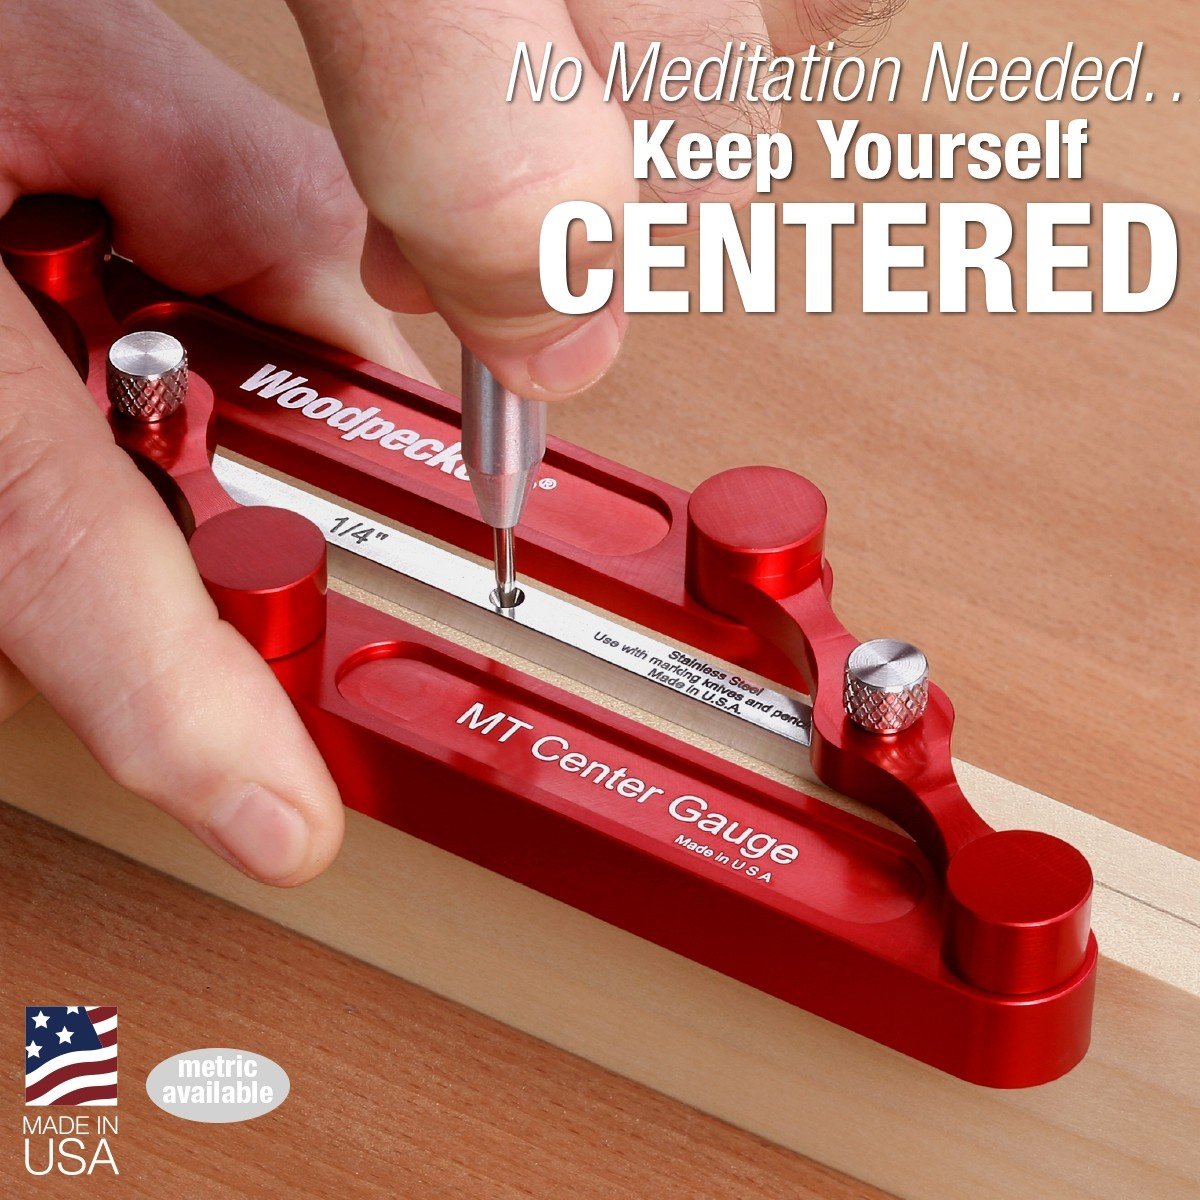 MT Center Gauge & Doweling Jig - OneTime Tool – ShopWoodpeckers.ca